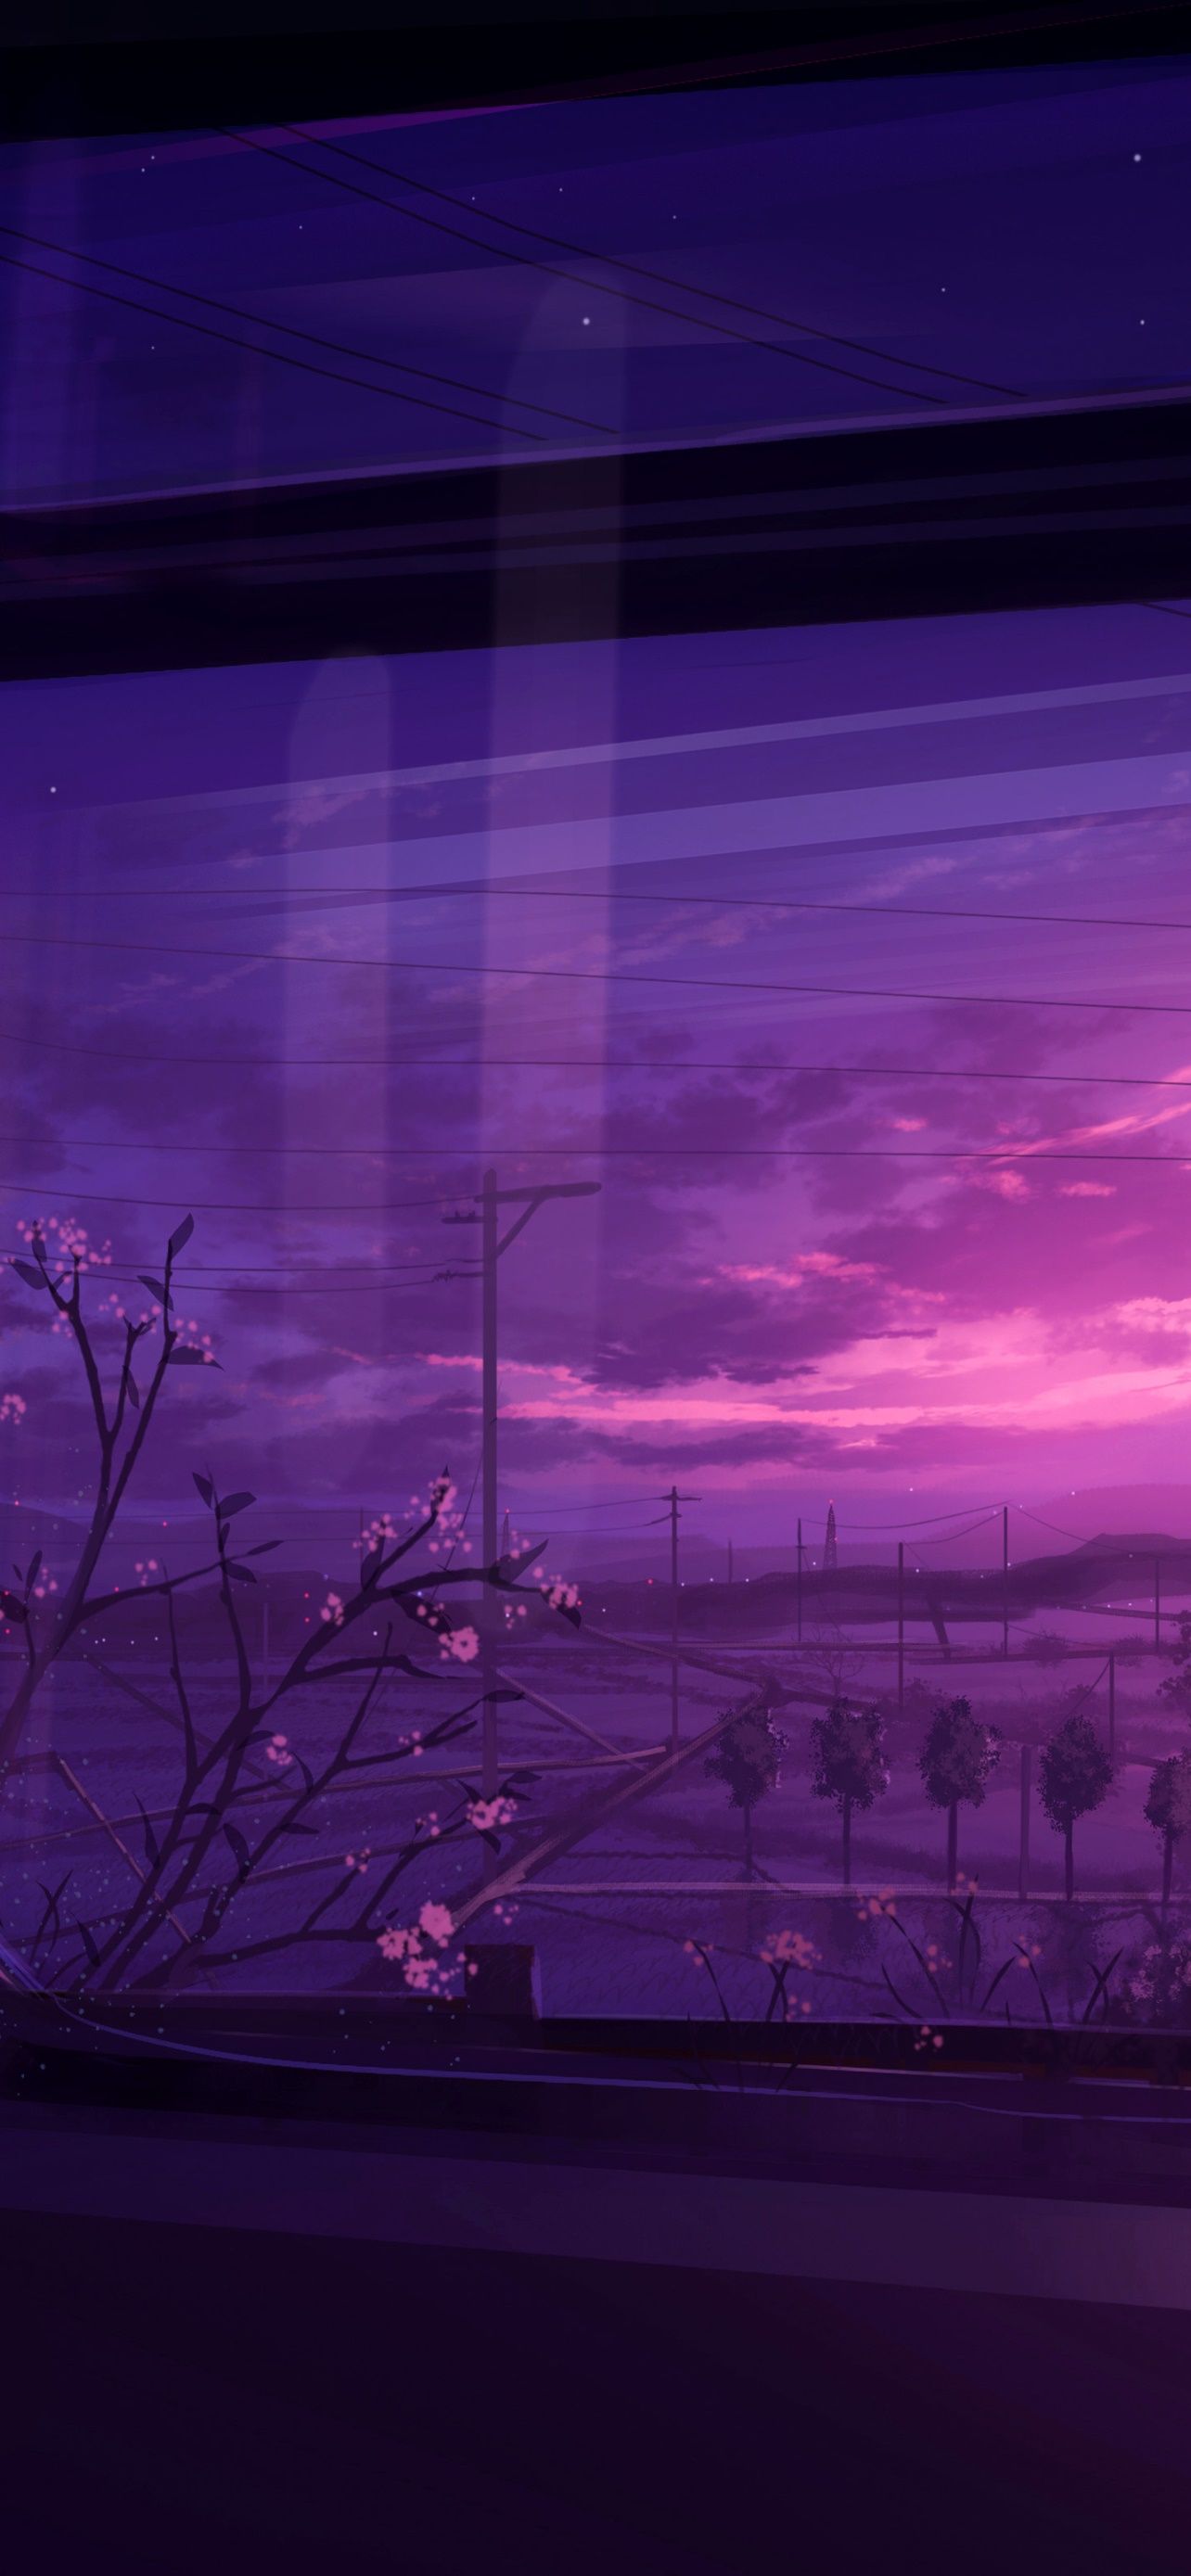 Wallpaper / Anime Sunset Phone Wallpaper, Power Line, Scenery, Landscape, 1284x2778 free download